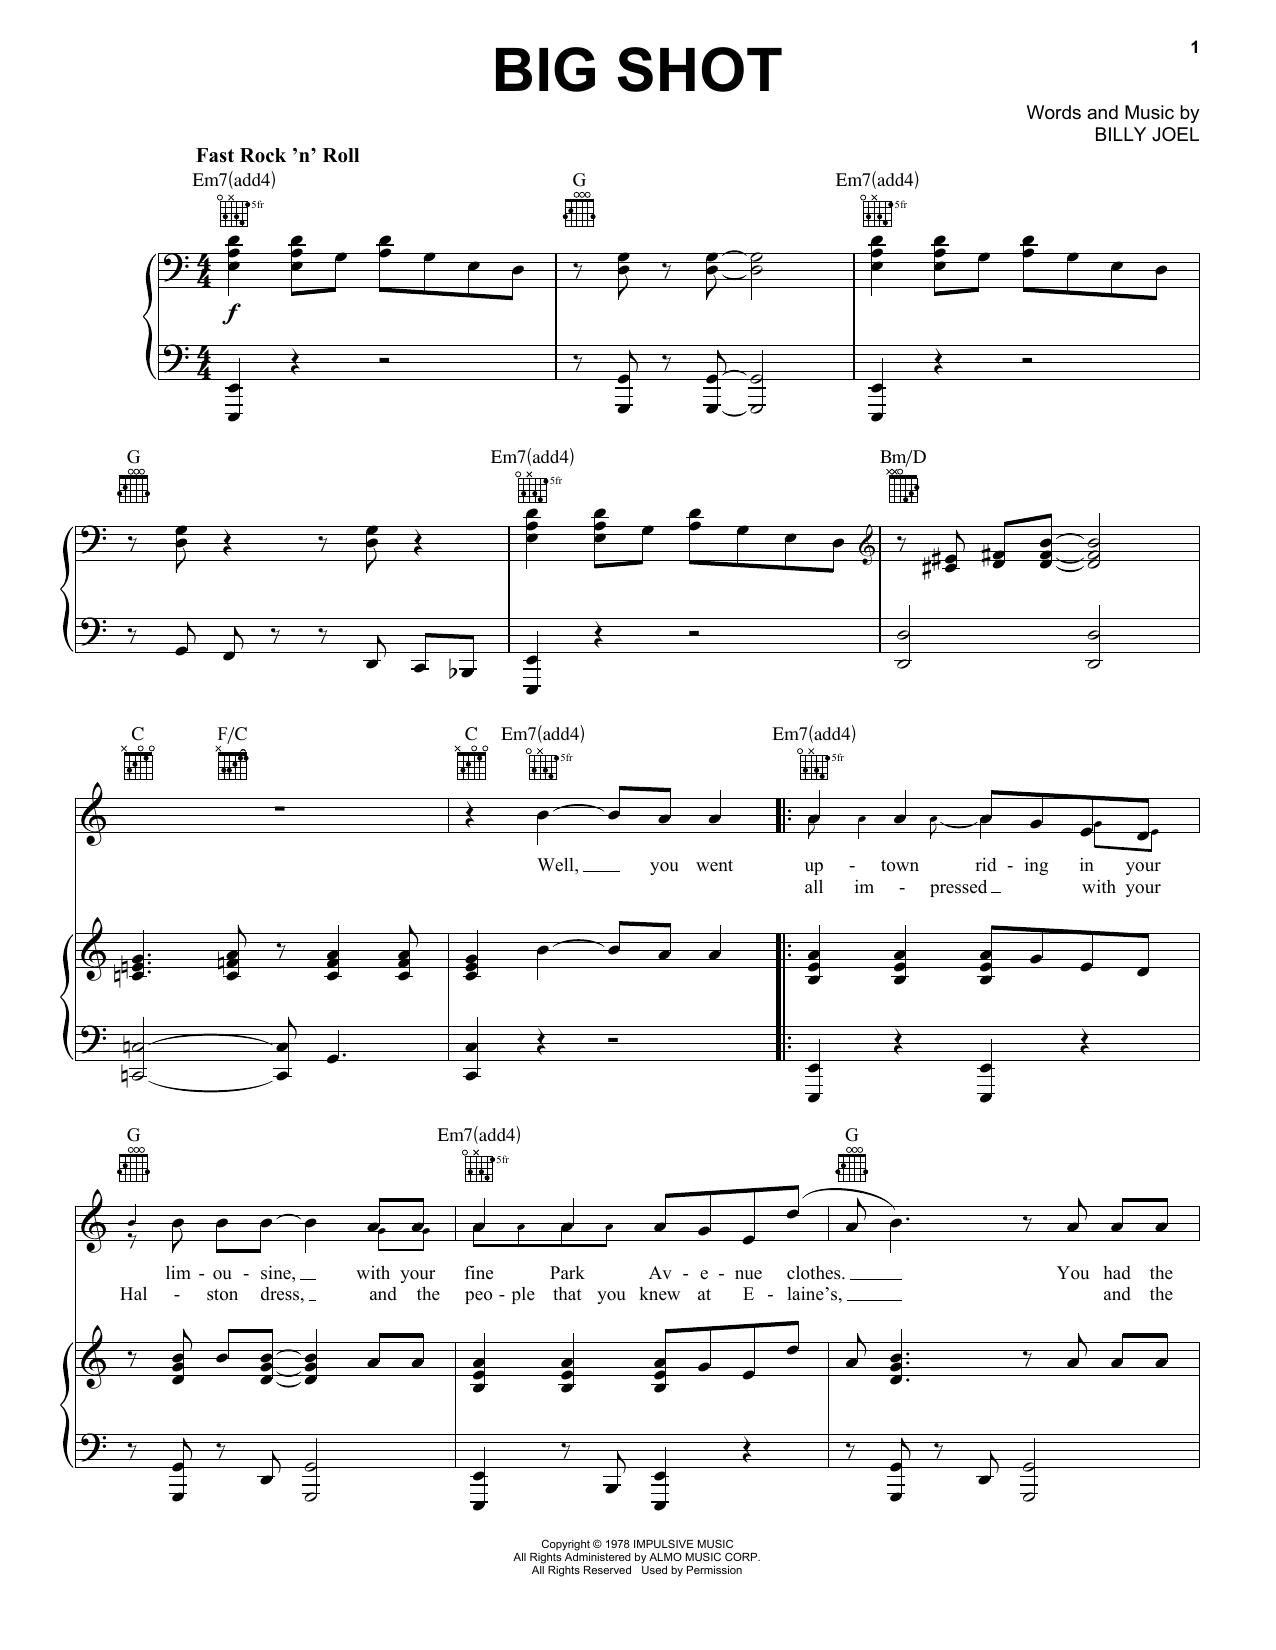 Billy Joel Big Shot Sheet Music Notes & Chords for Lyrics & Piano Chords - Download or Print PDF